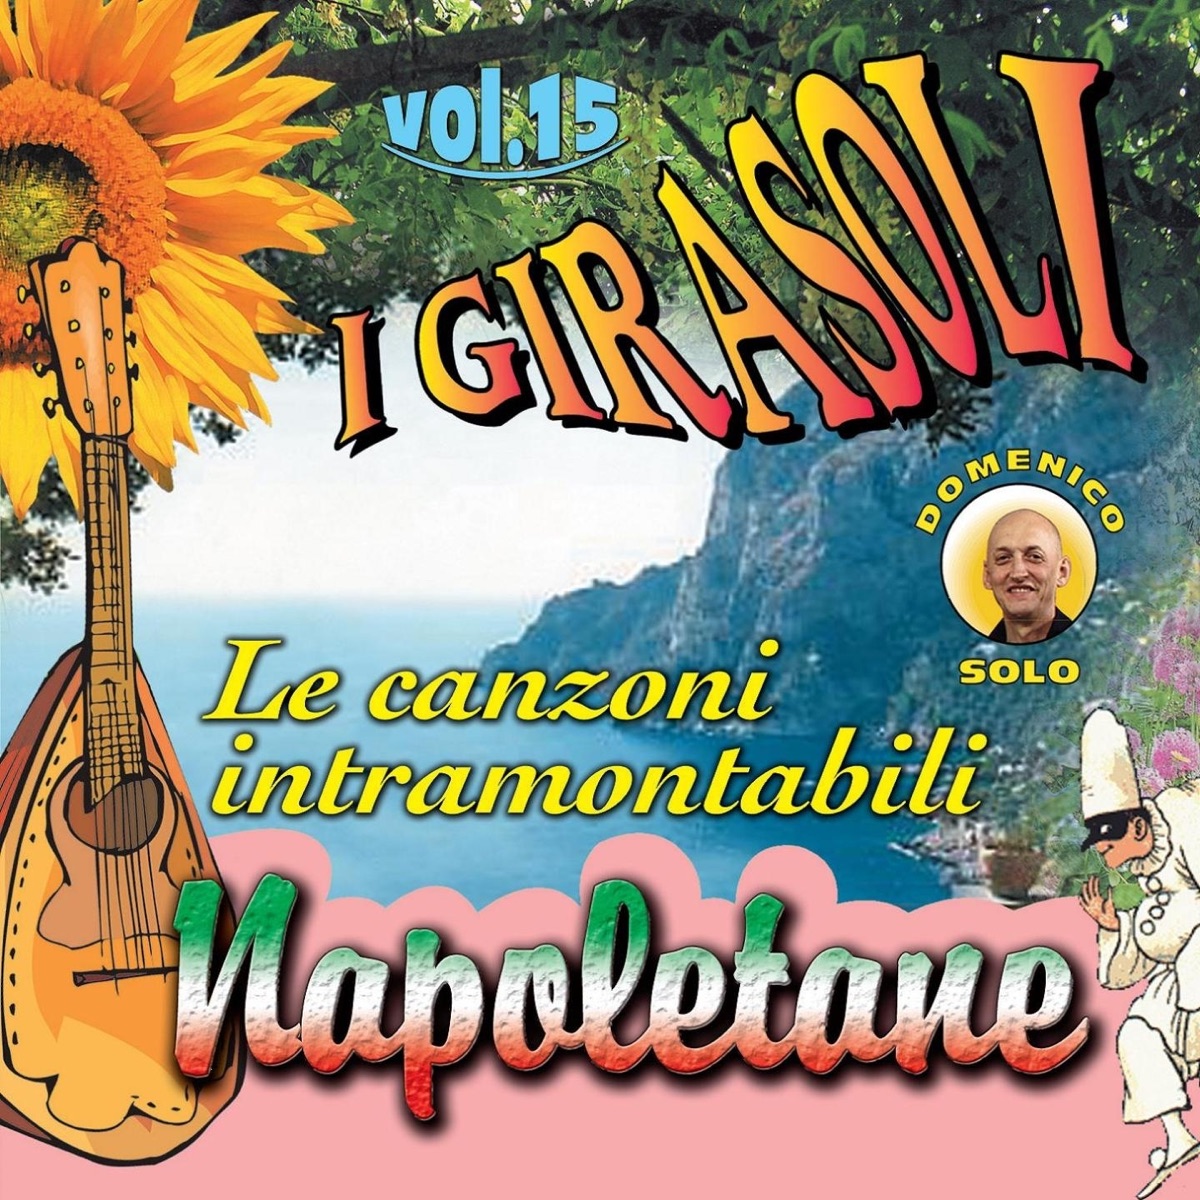 Le Canzoni Di Casa Nostra - Raccolta N. 1 by I Girasoli on Apple Music